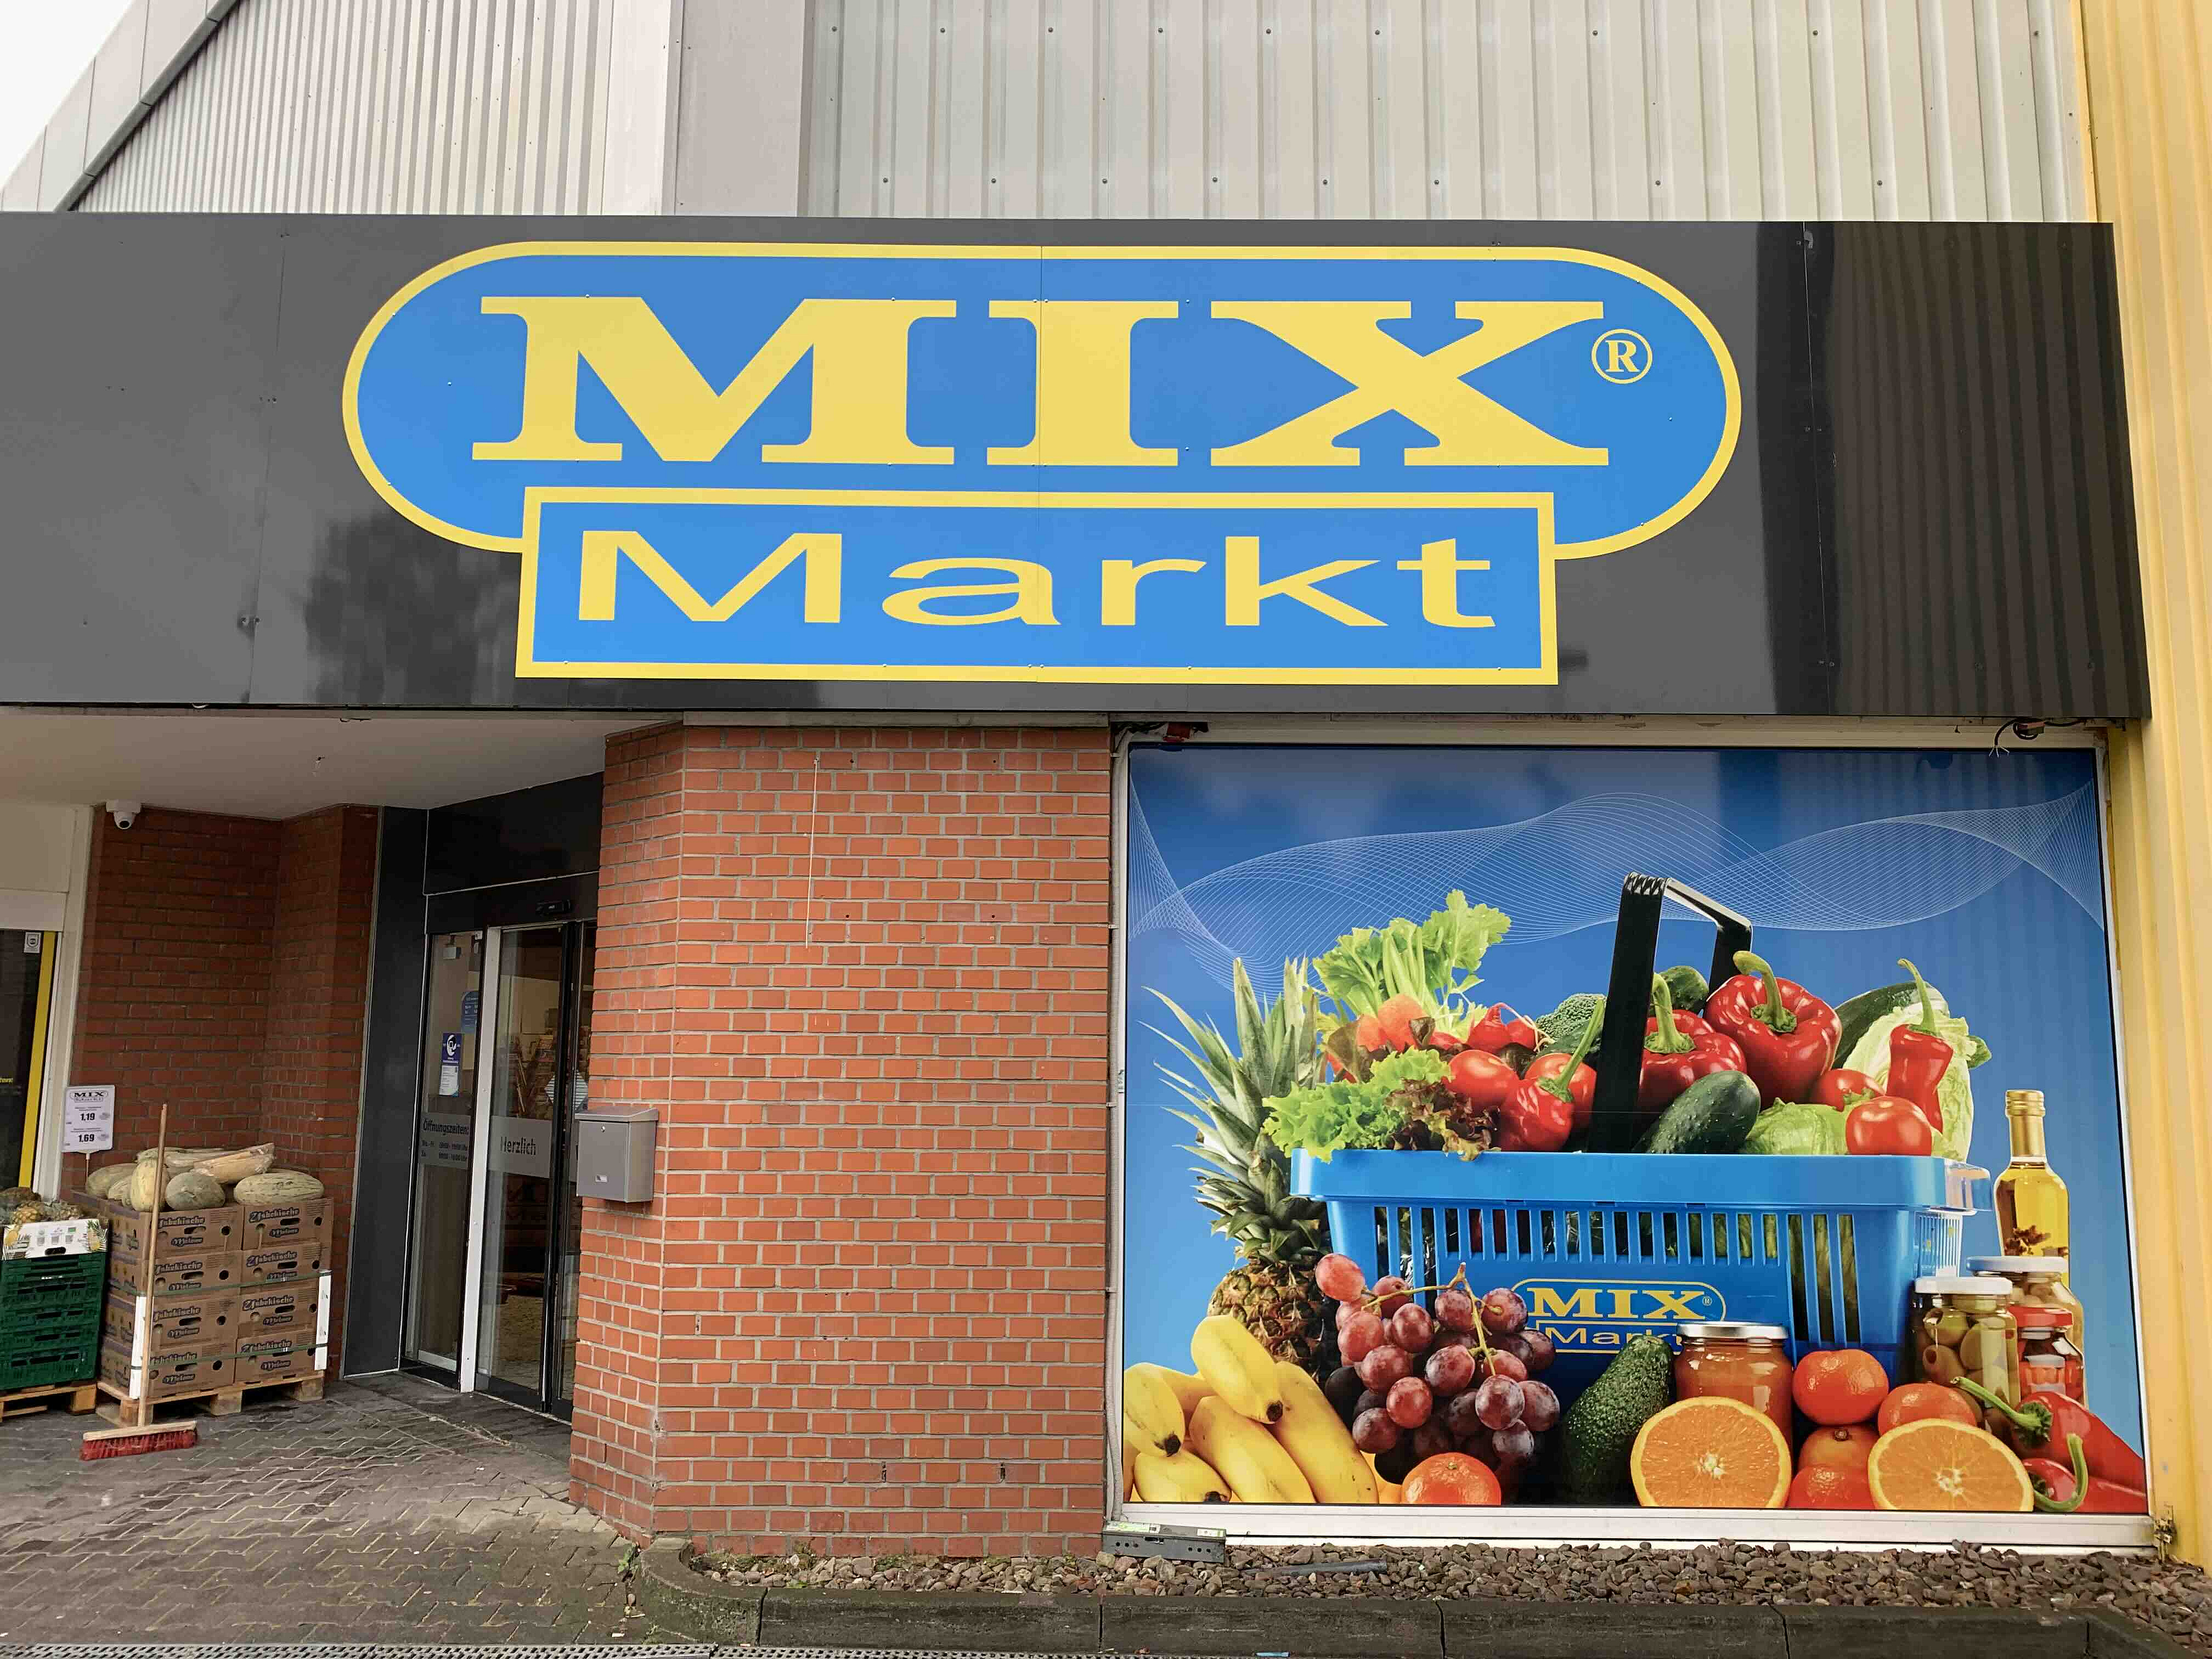 Mix Markt, Bielefeld